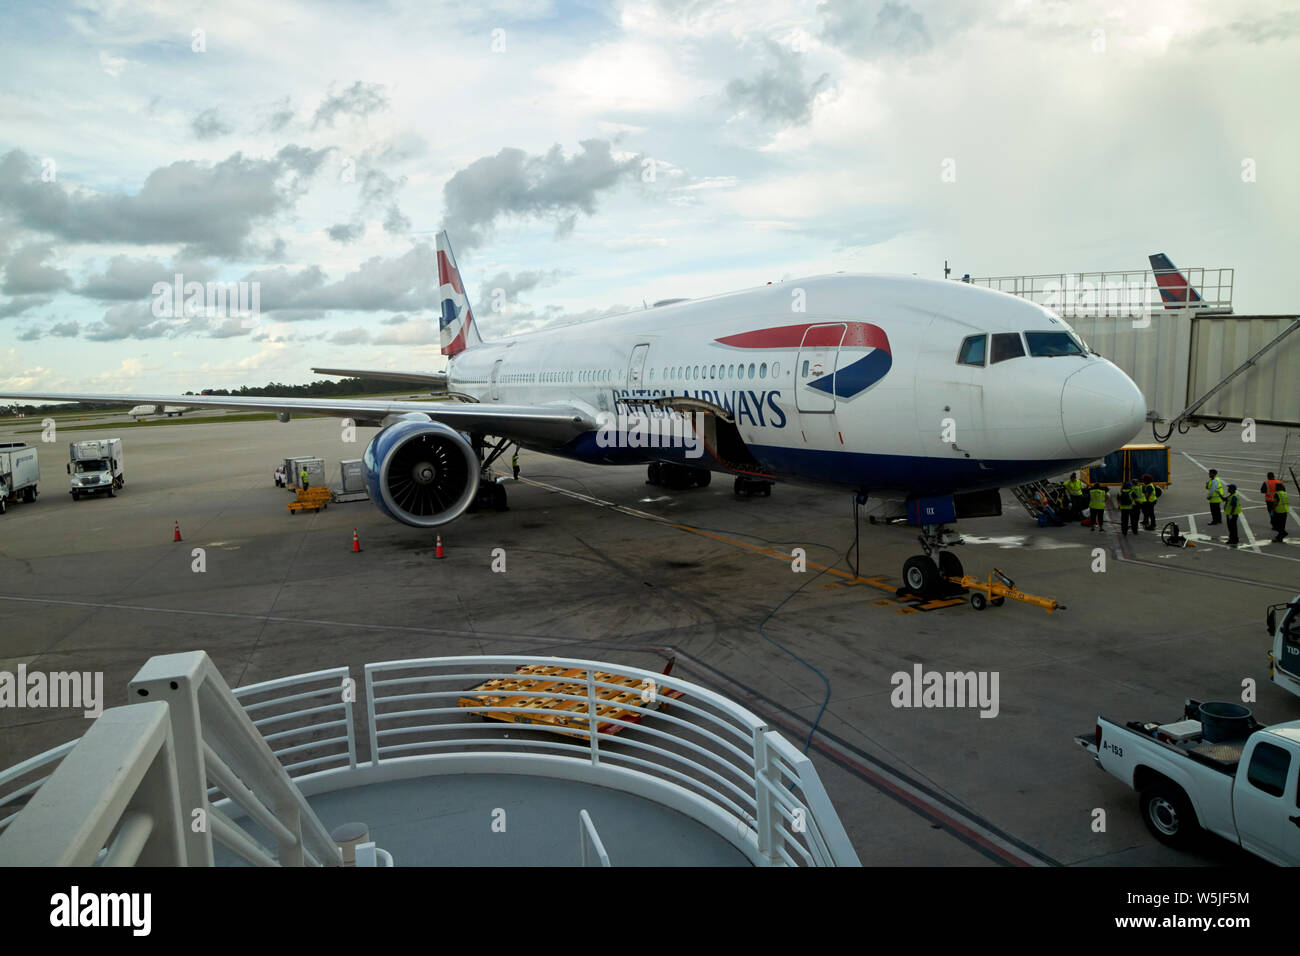 British Airways boeing 777 G-VIIX airside on stand at Orlando International airport MCO terminal florida usa united states of america Stock Photo